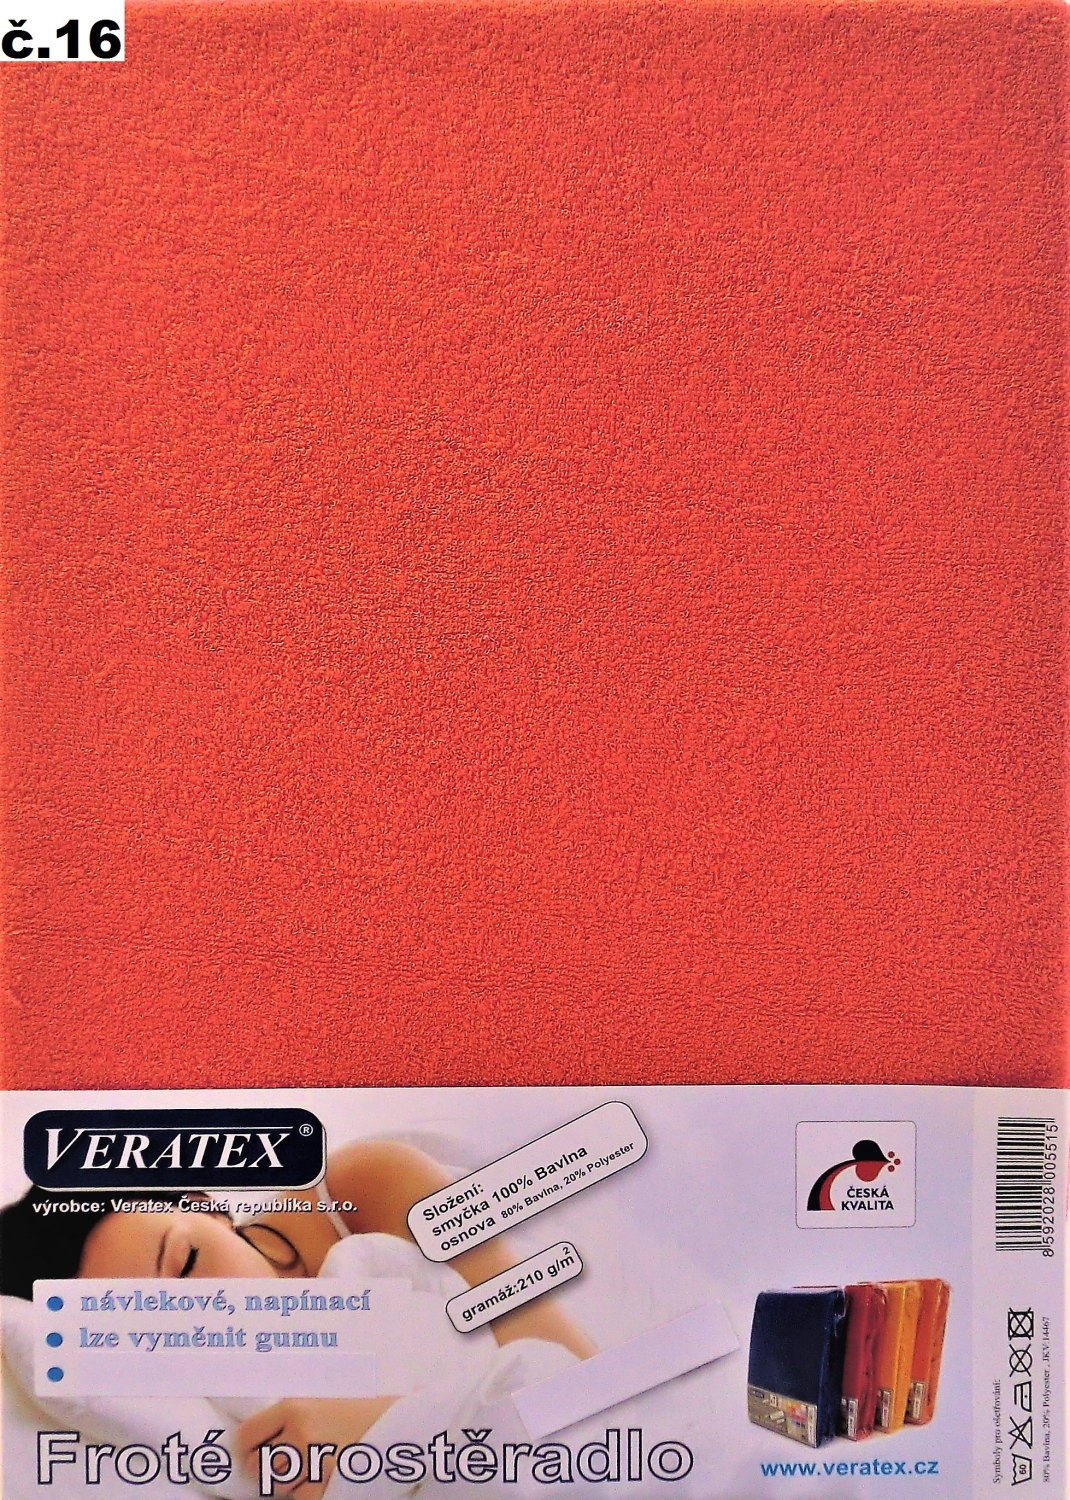 Veratex Froté prostěradlo jednolůžko 90x200/25cm (č.16 malinové)